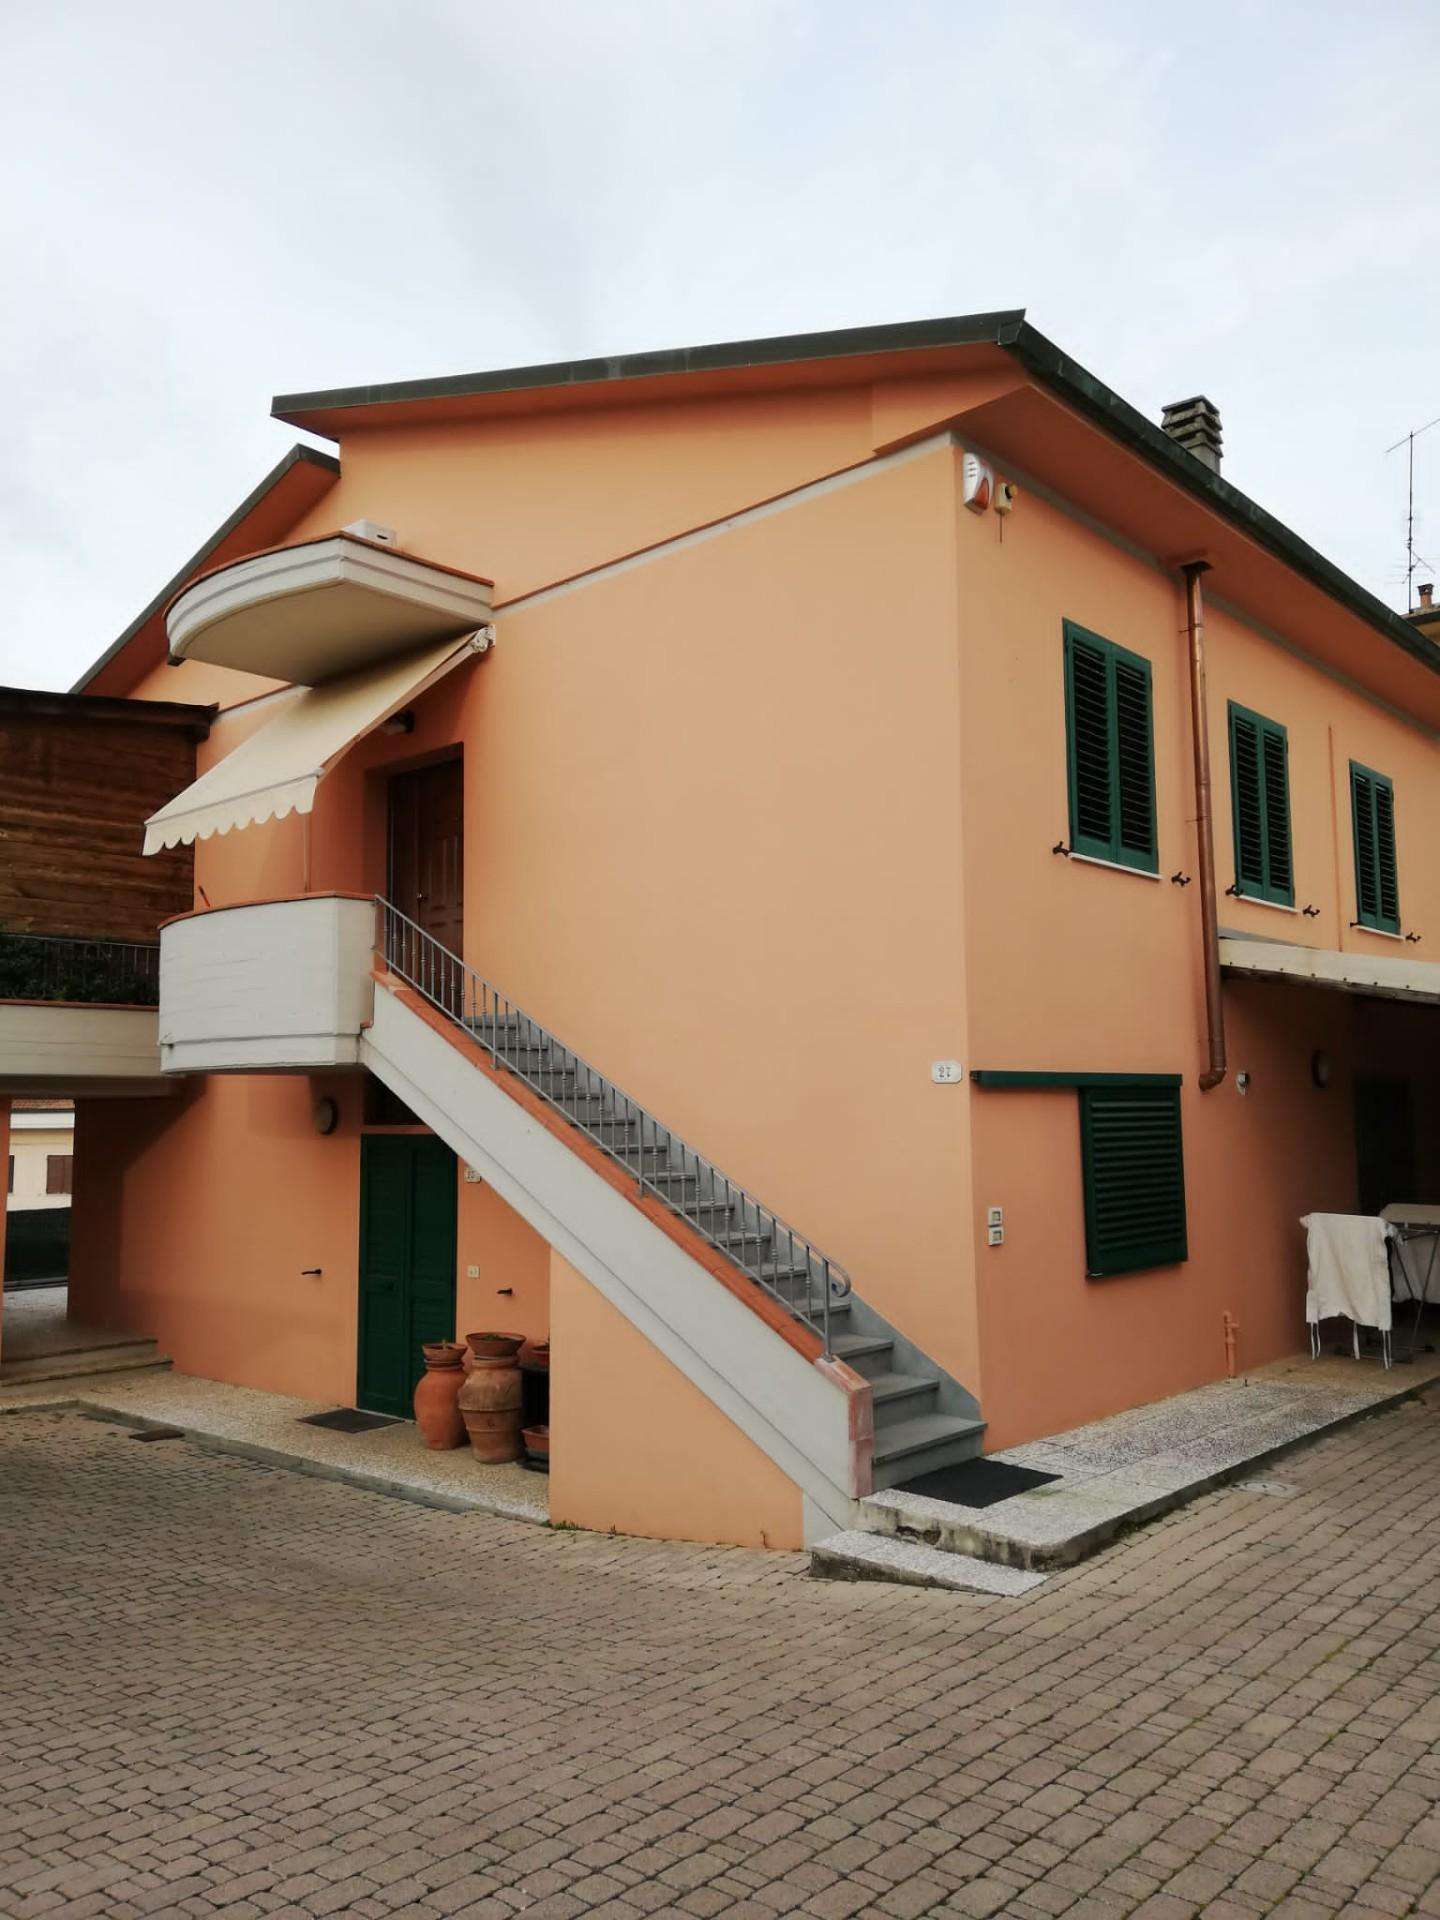 Palazzo - Stabile in Vendita a Montopoli in Val d'Arno Montopoli in Val D 'arno